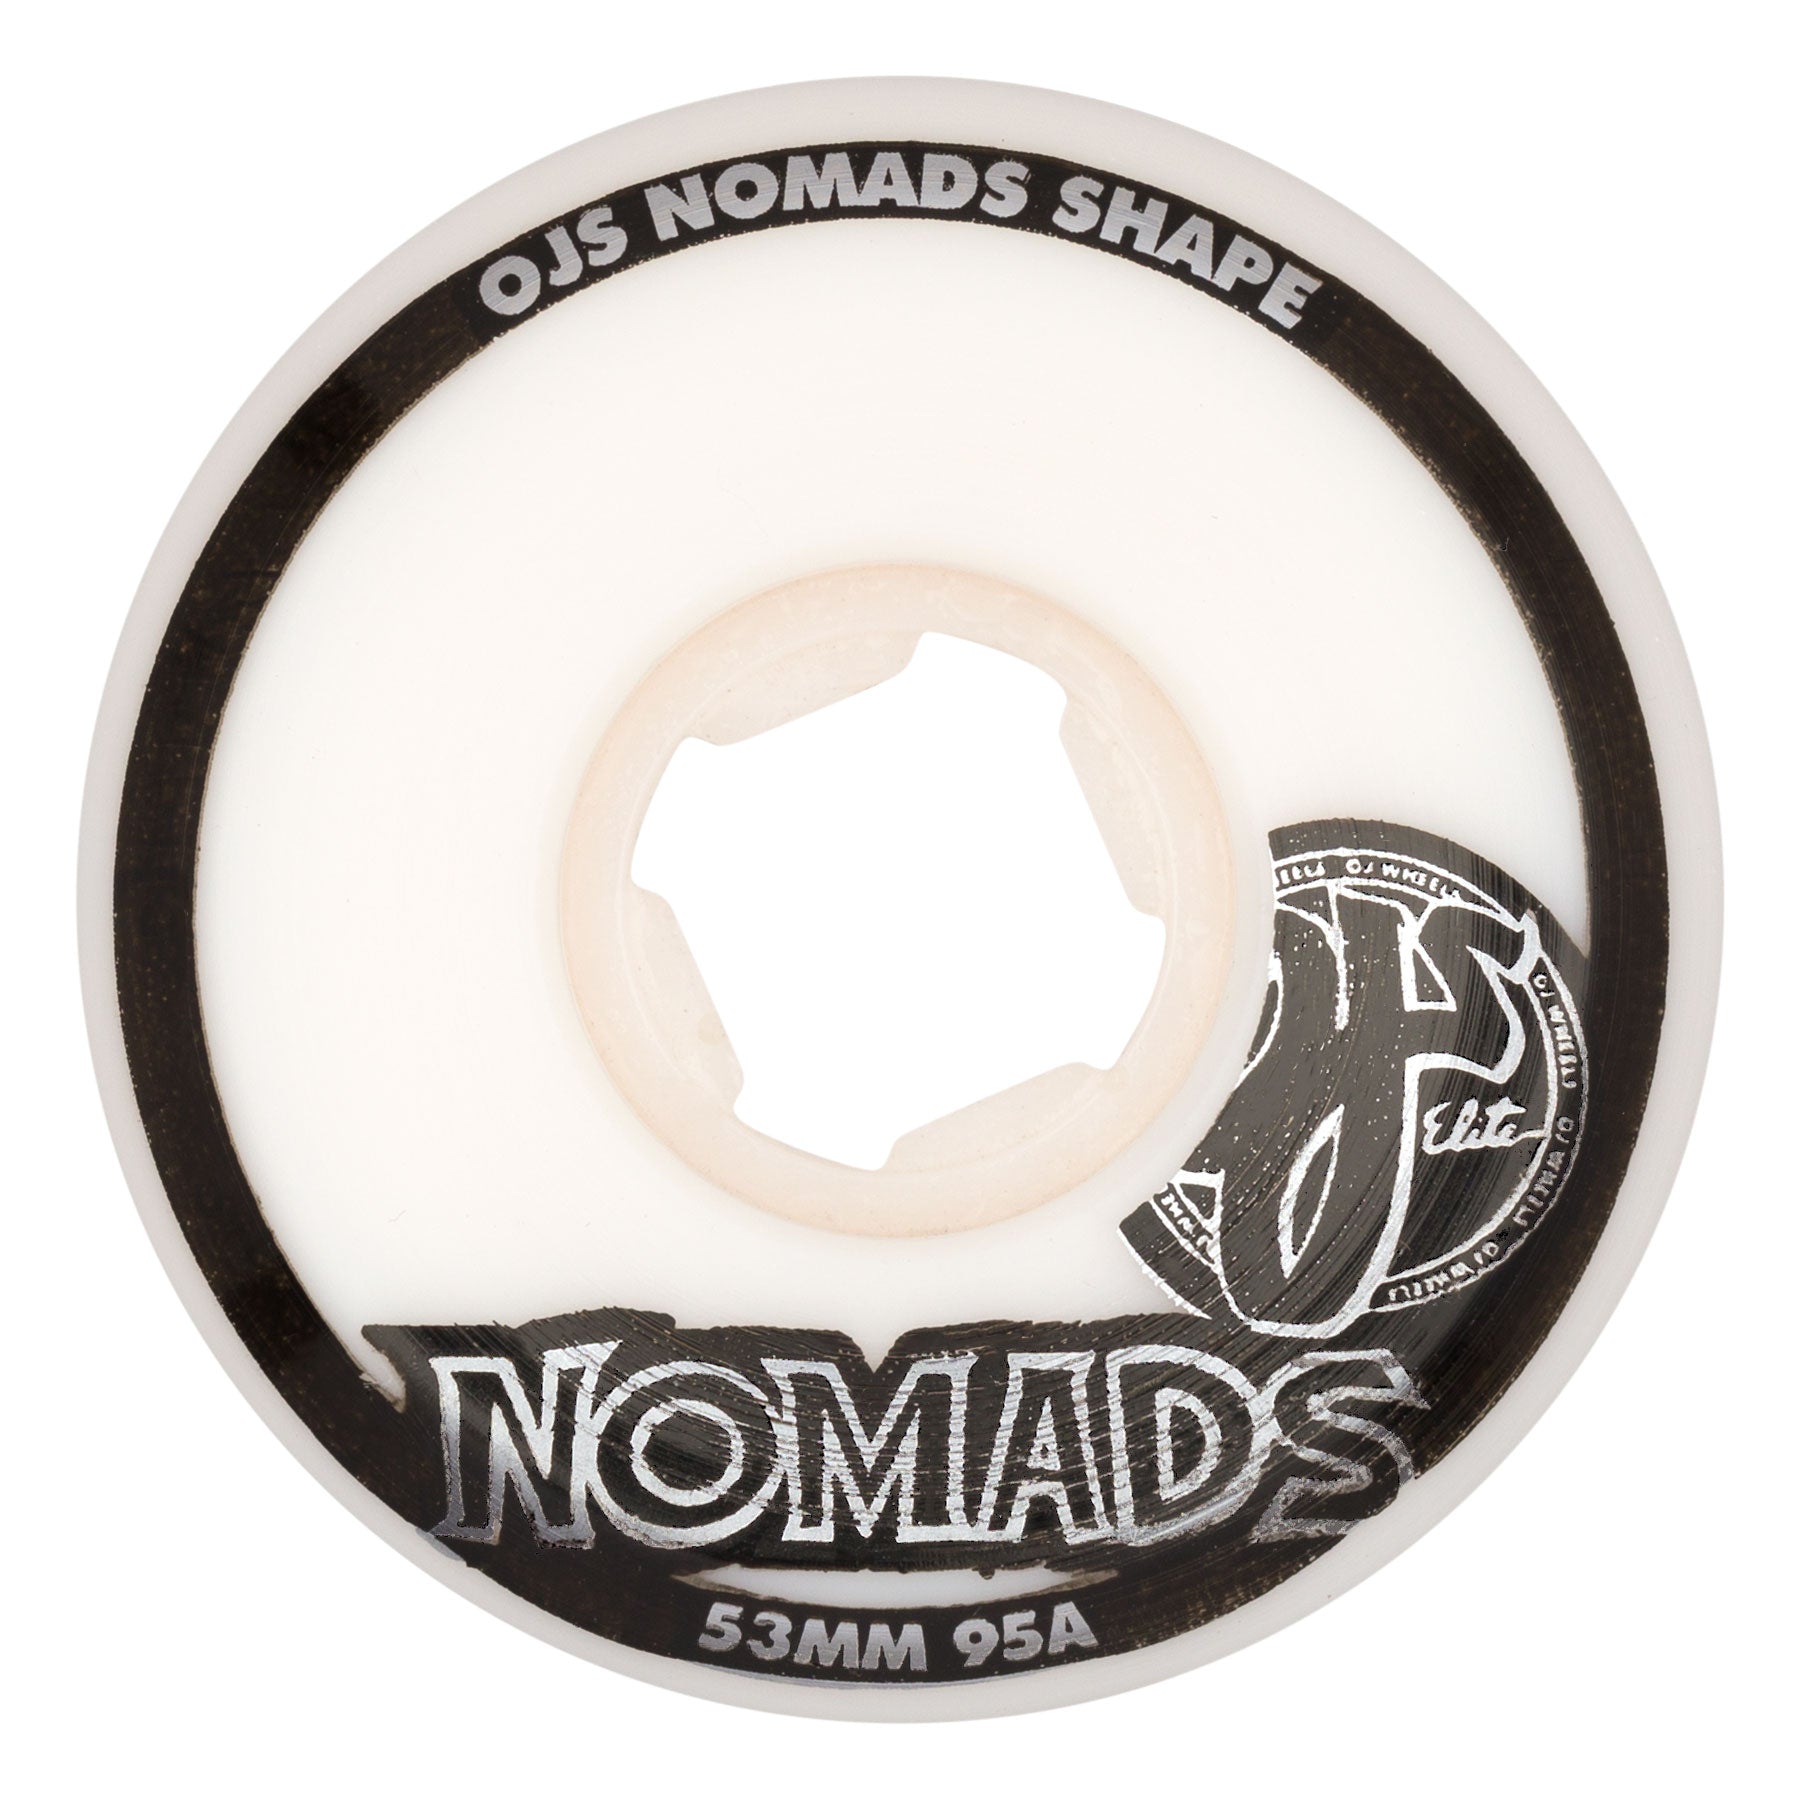 Elite White Nomads, 53mm/95a